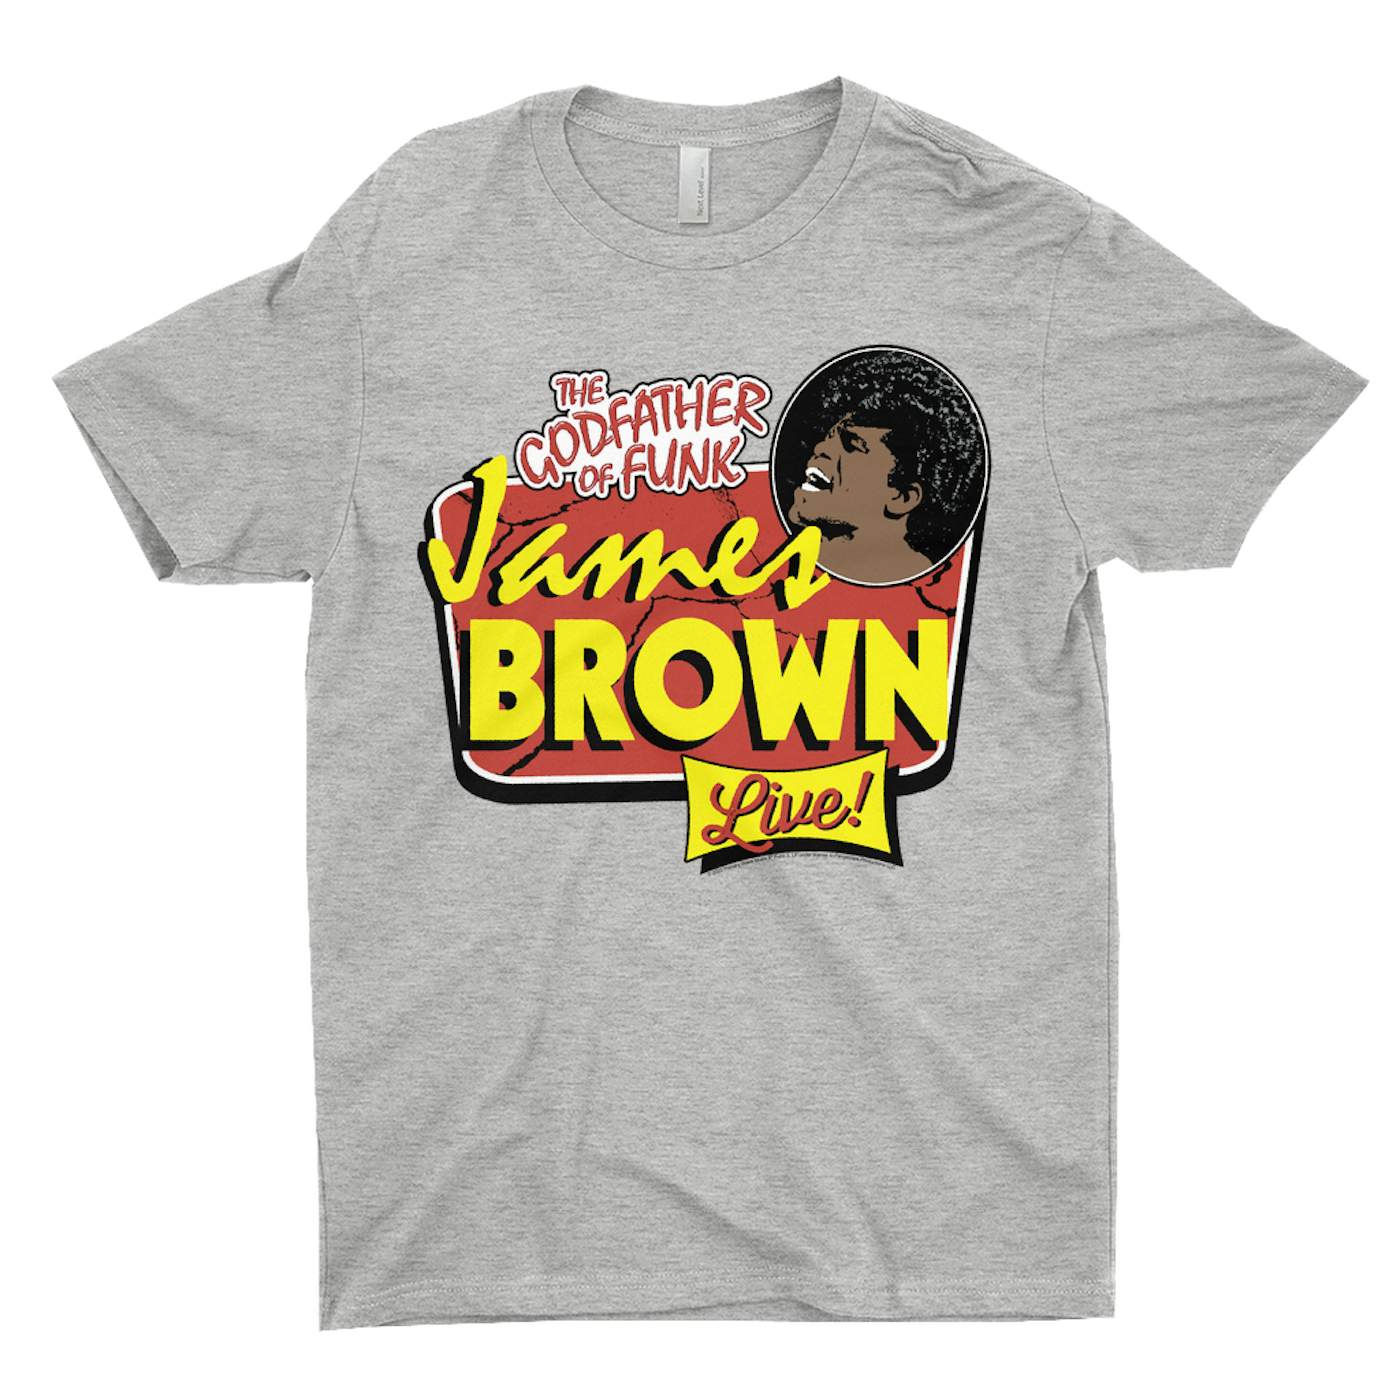 James Brown T-Shirt | Godfather Of Funk, LIVE! James Brown Shirt